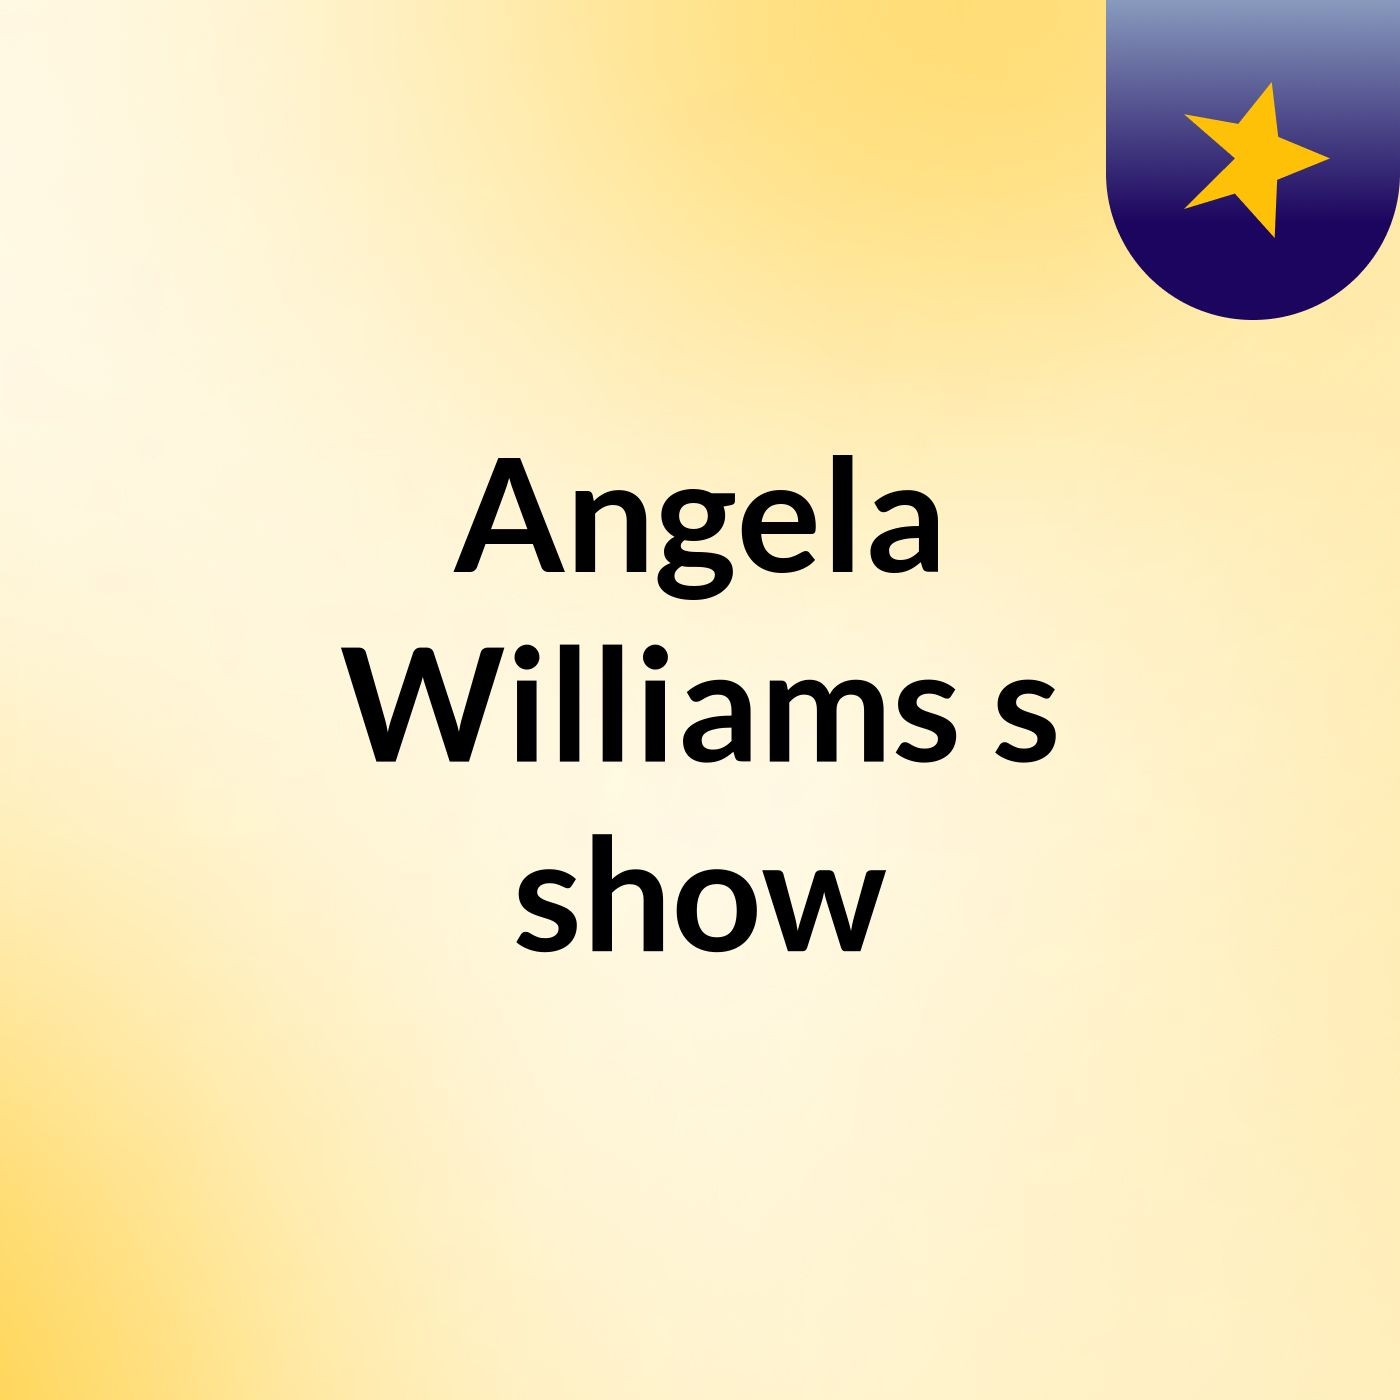 Episode 3 - Angela Williams's show